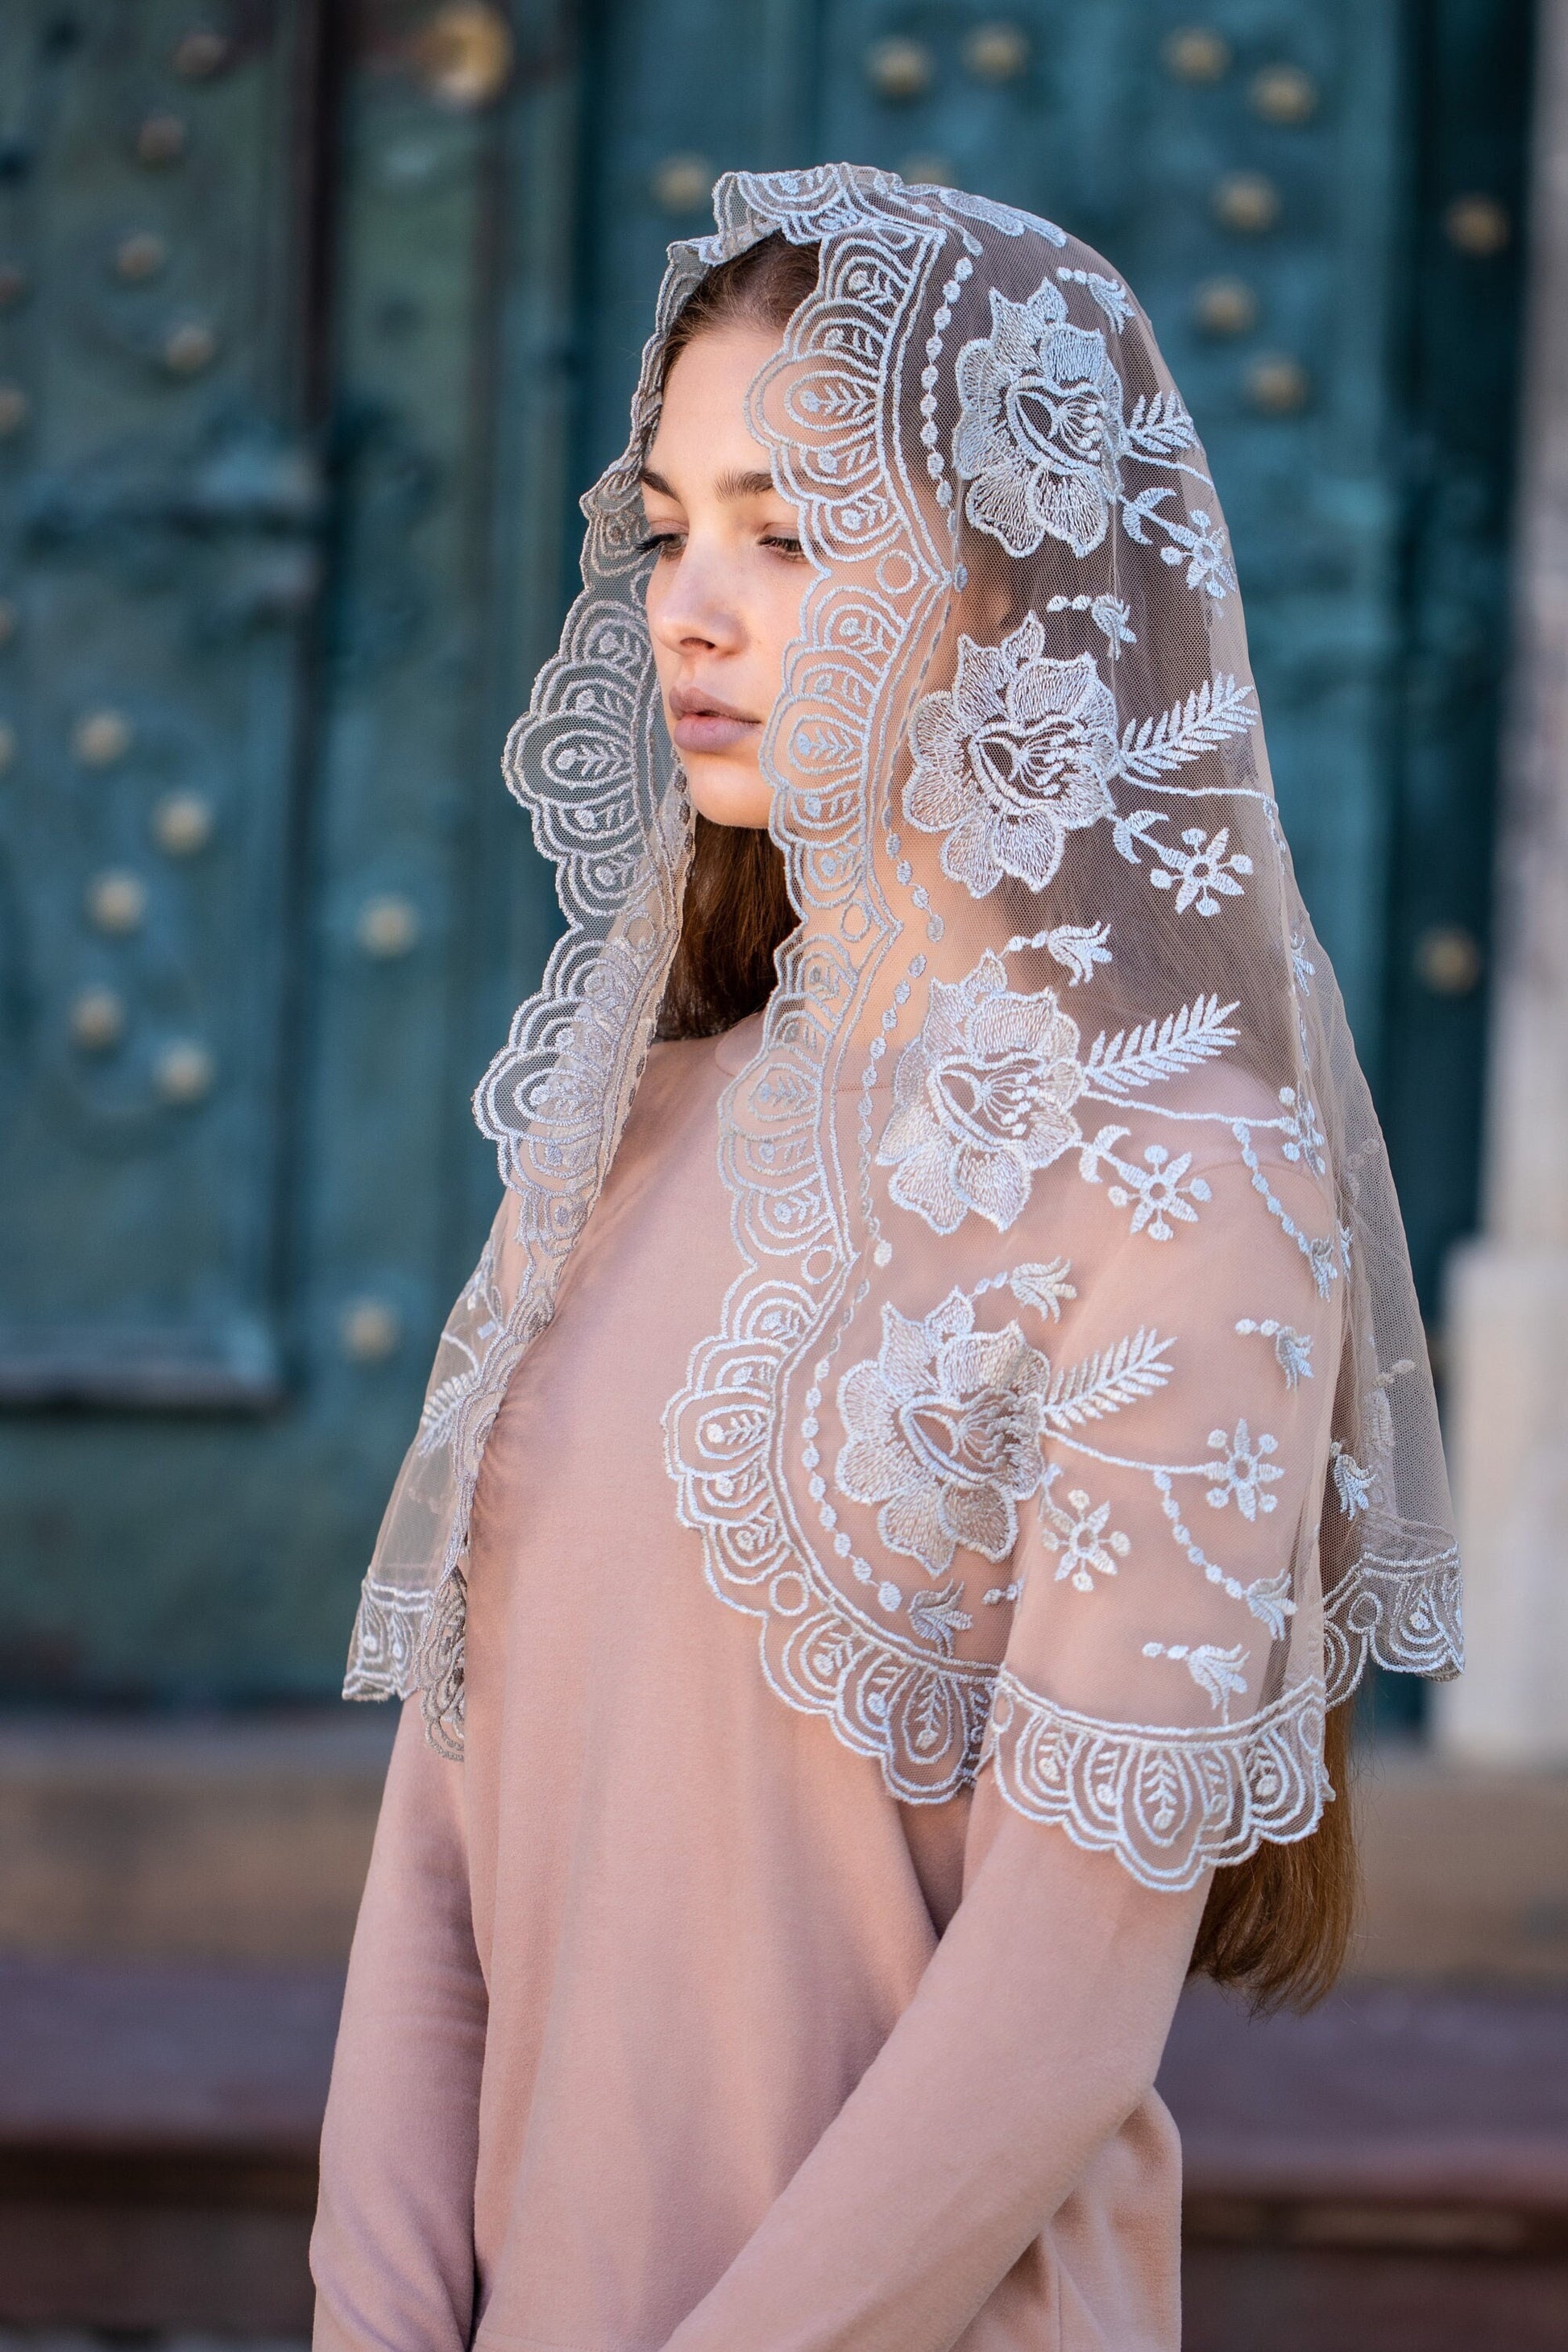 NEW | Catholic head covering veil for church - Maria Veils